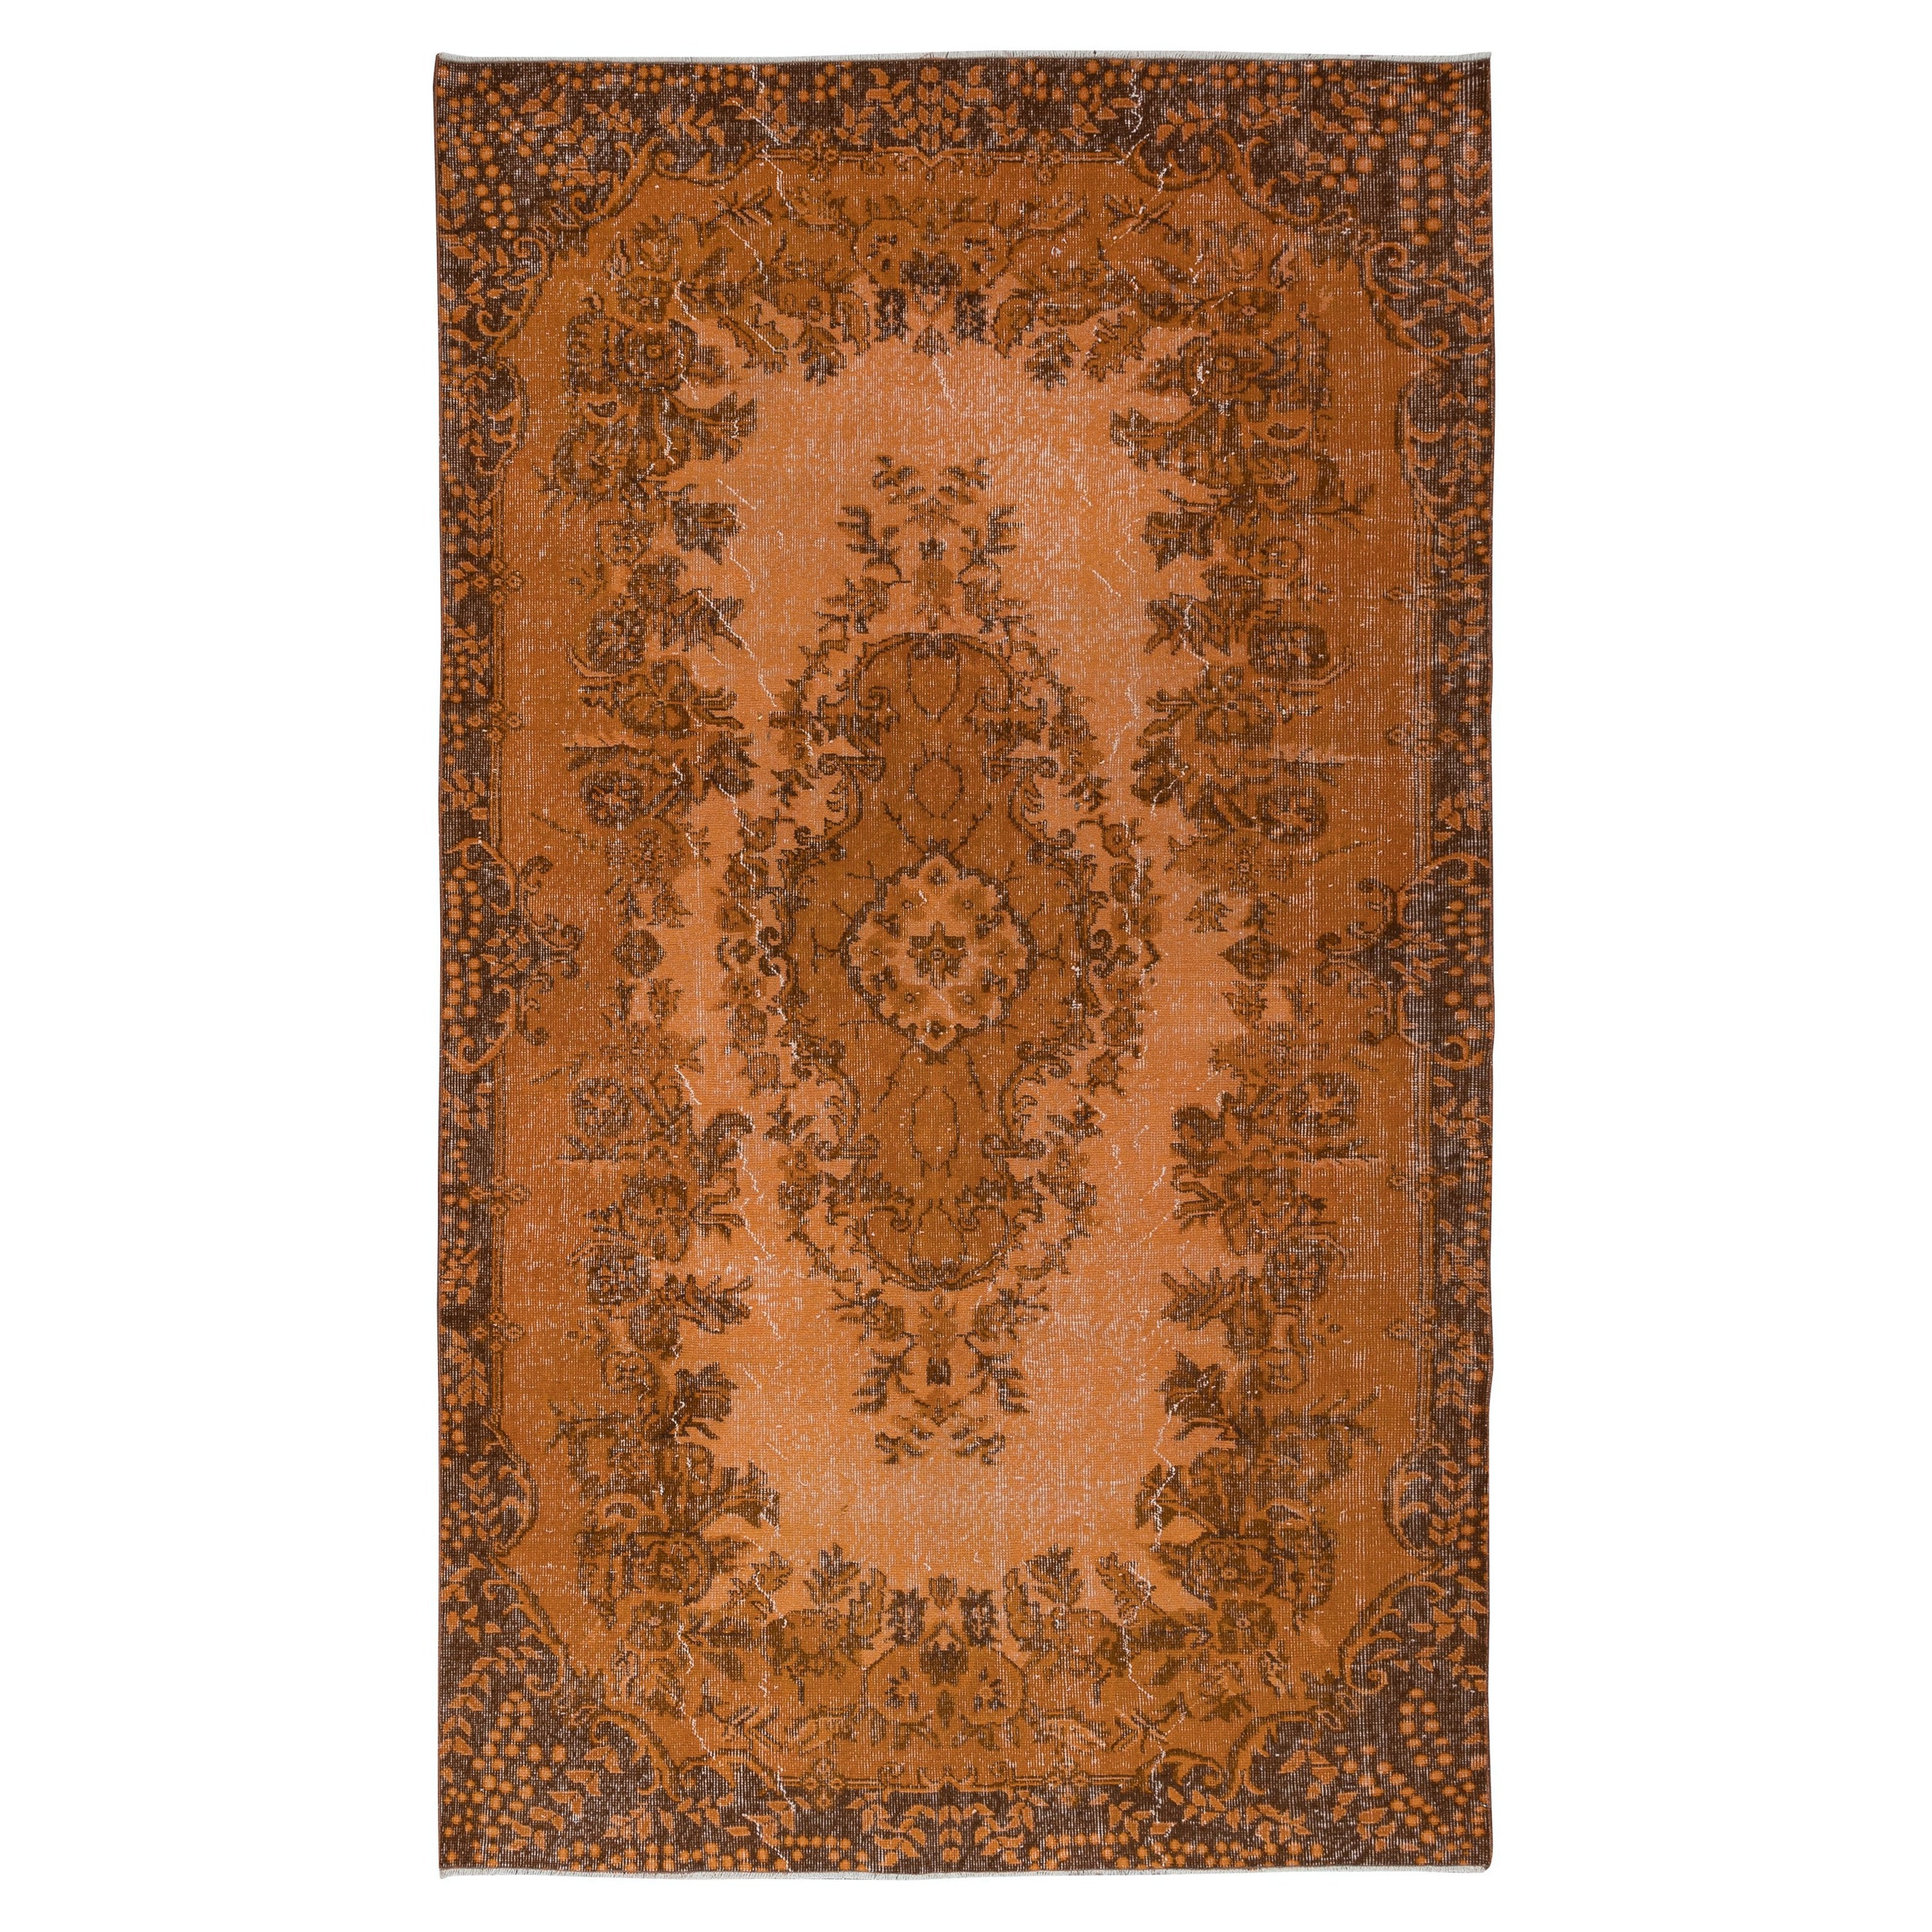 5.6x9.4 Ft Authentic Orange Rug for Modern Interiors, Handmade Anatolian Carpet For Sale